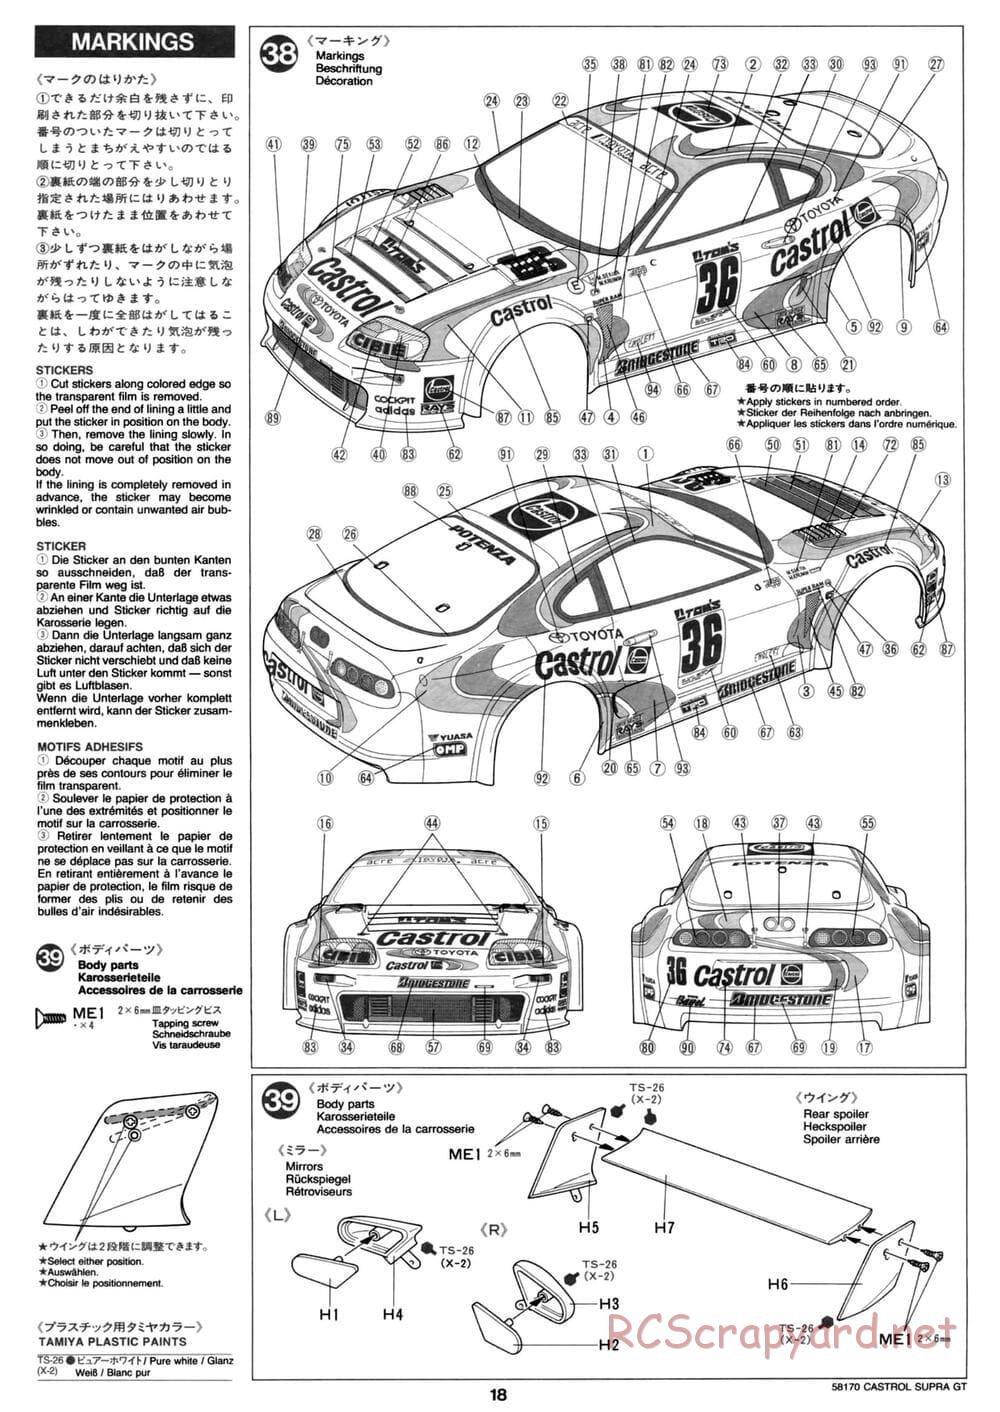 Tamiya - Castrol Toyota Tom's Supra GT - TA-02W Chassis - Manual - Page 18